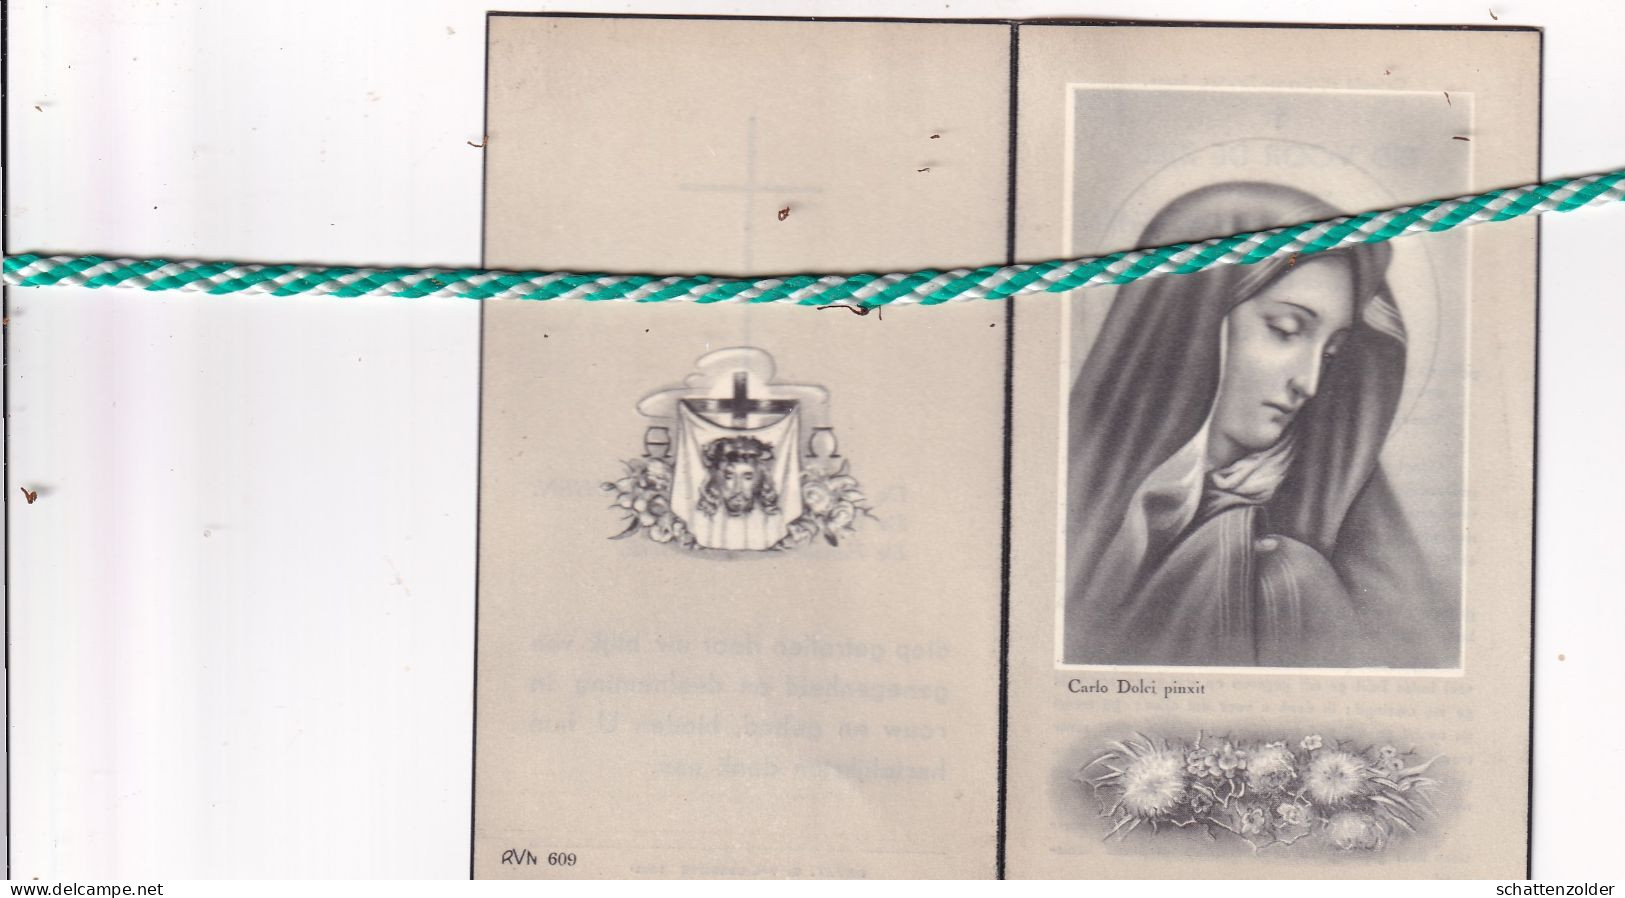 Rosalie Van Hoyweghen-De Souter-De Langhe, Rupelmonde 1874, 1951 - Obituary Notices